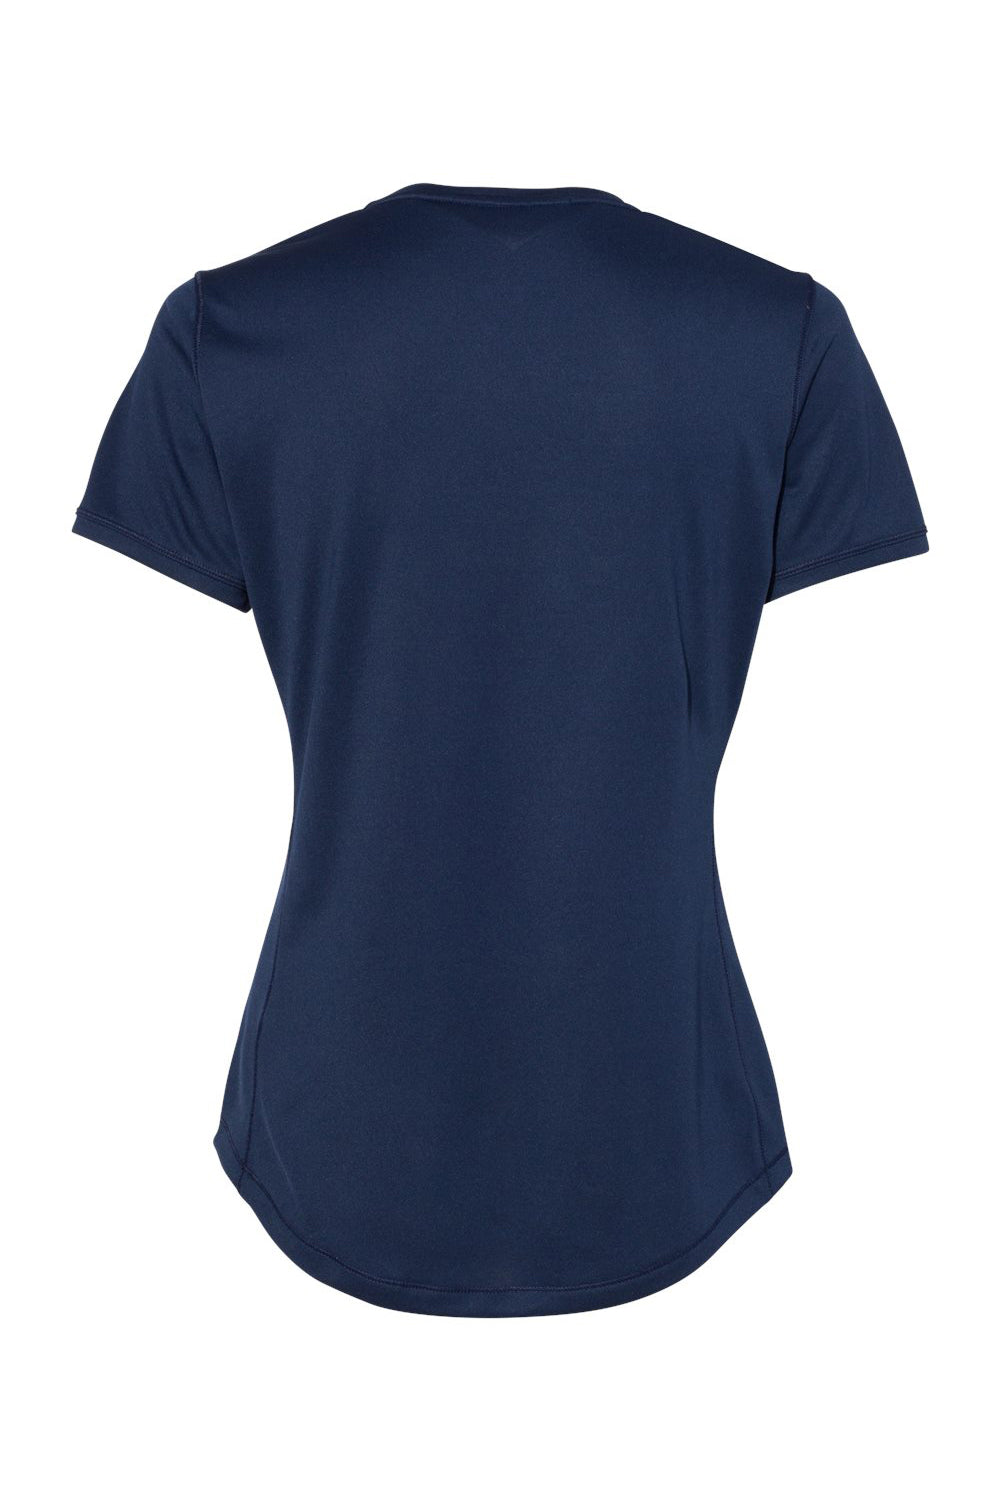 Adidas A377 Womens Short Sleeve Crewneck T-Shirt Collegiate Navy Blue Flat Back